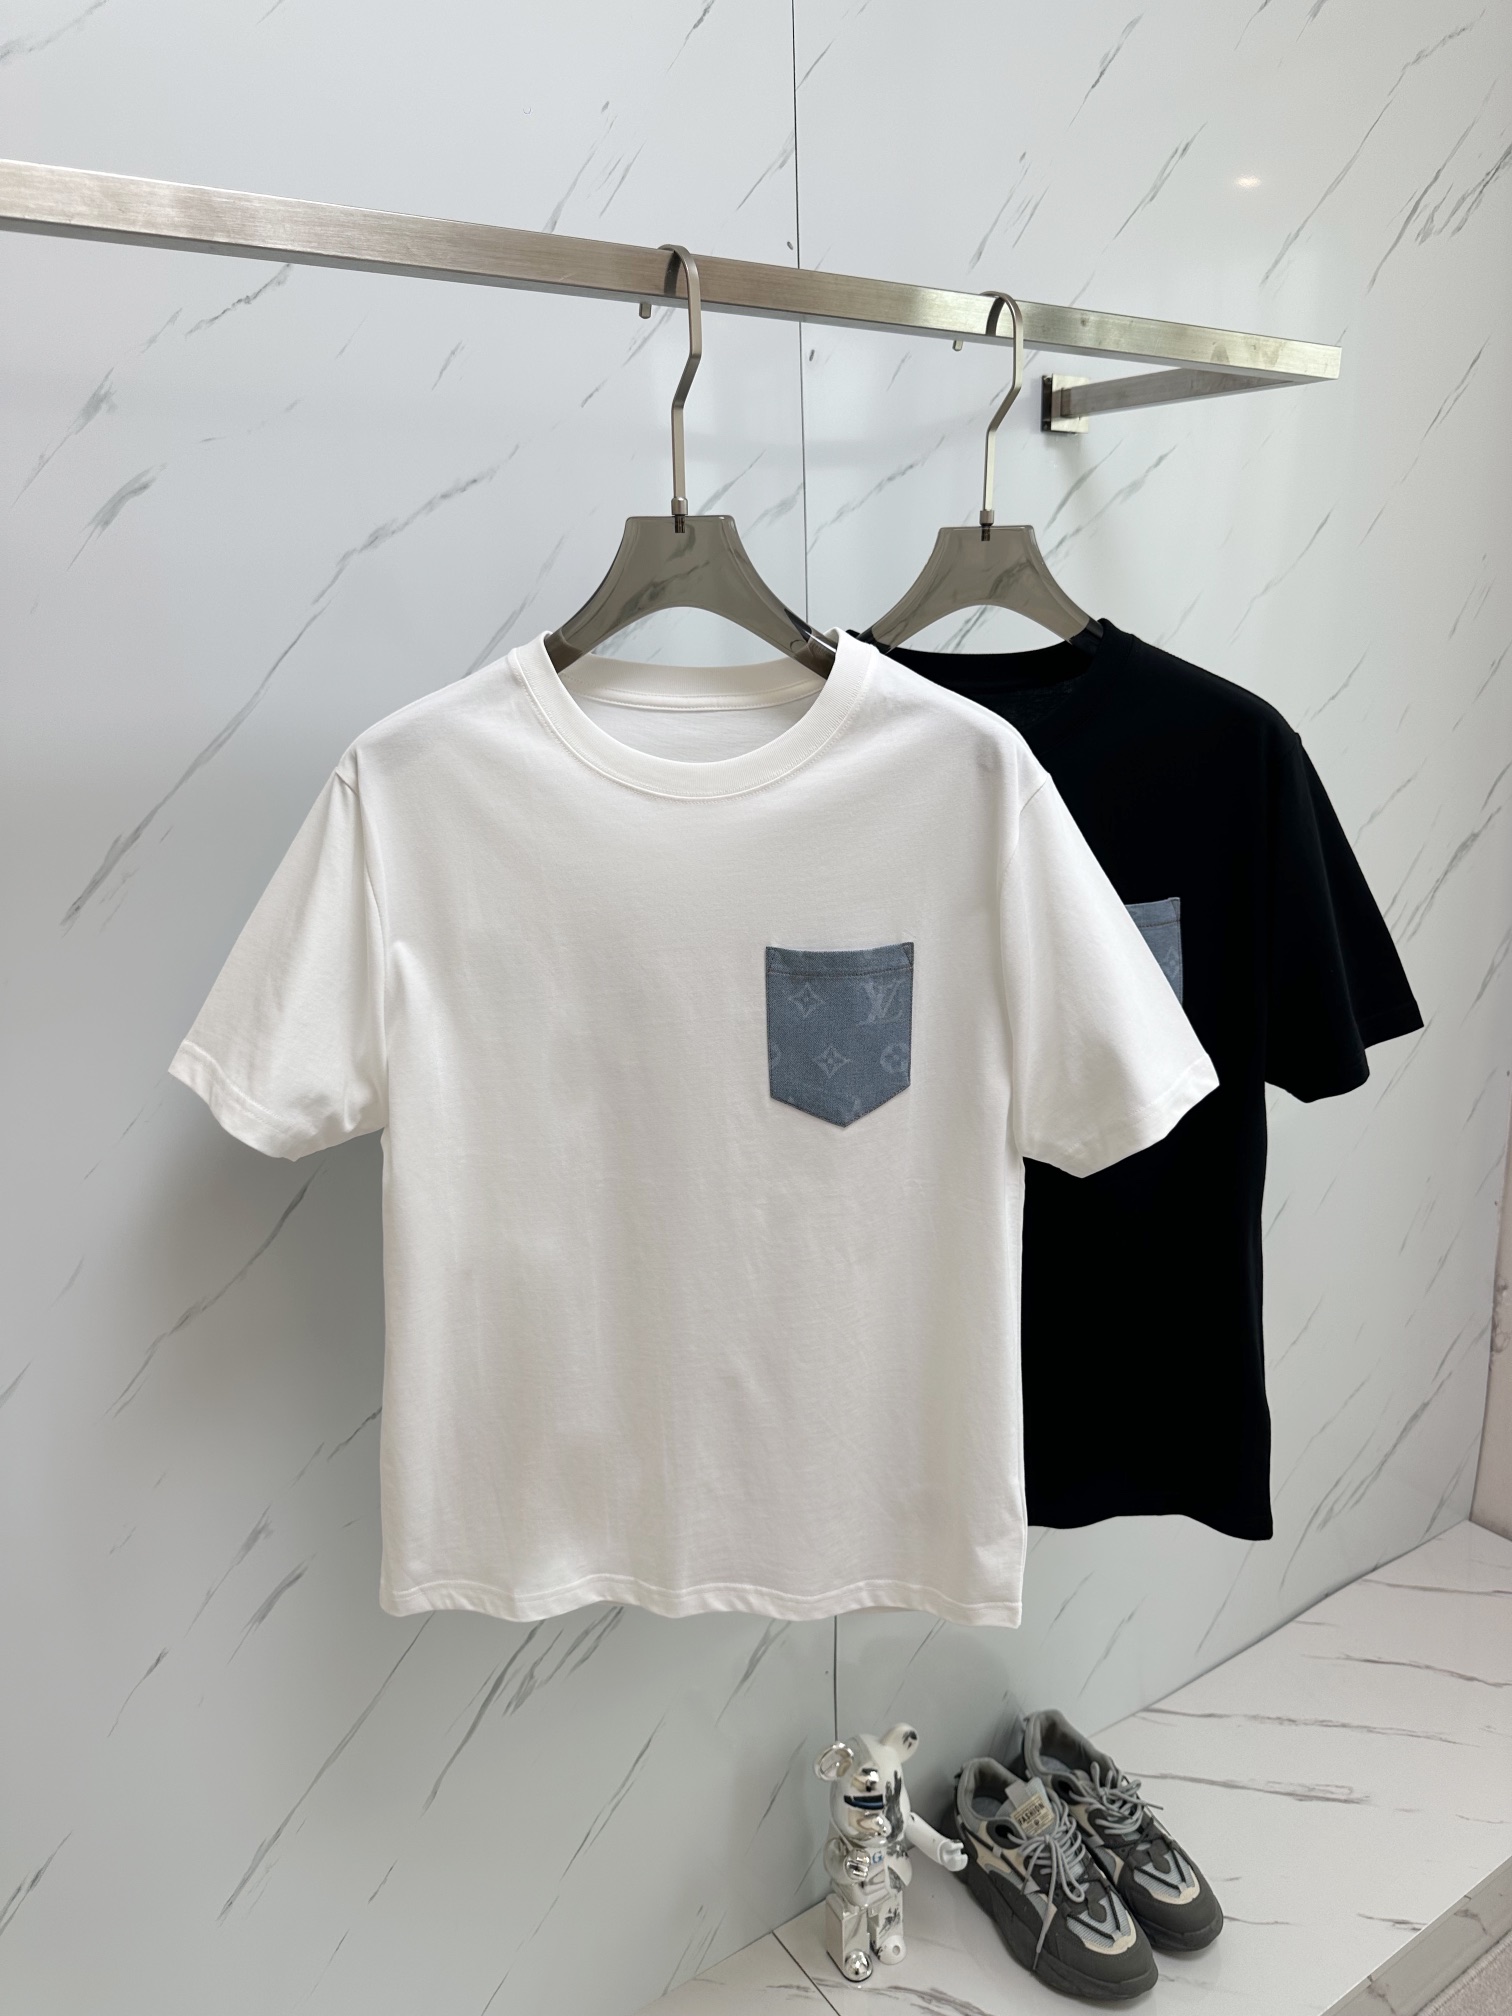 Louis Vuitton Clothing T-Shirt Black White Unisex Cotton Short Sleeve